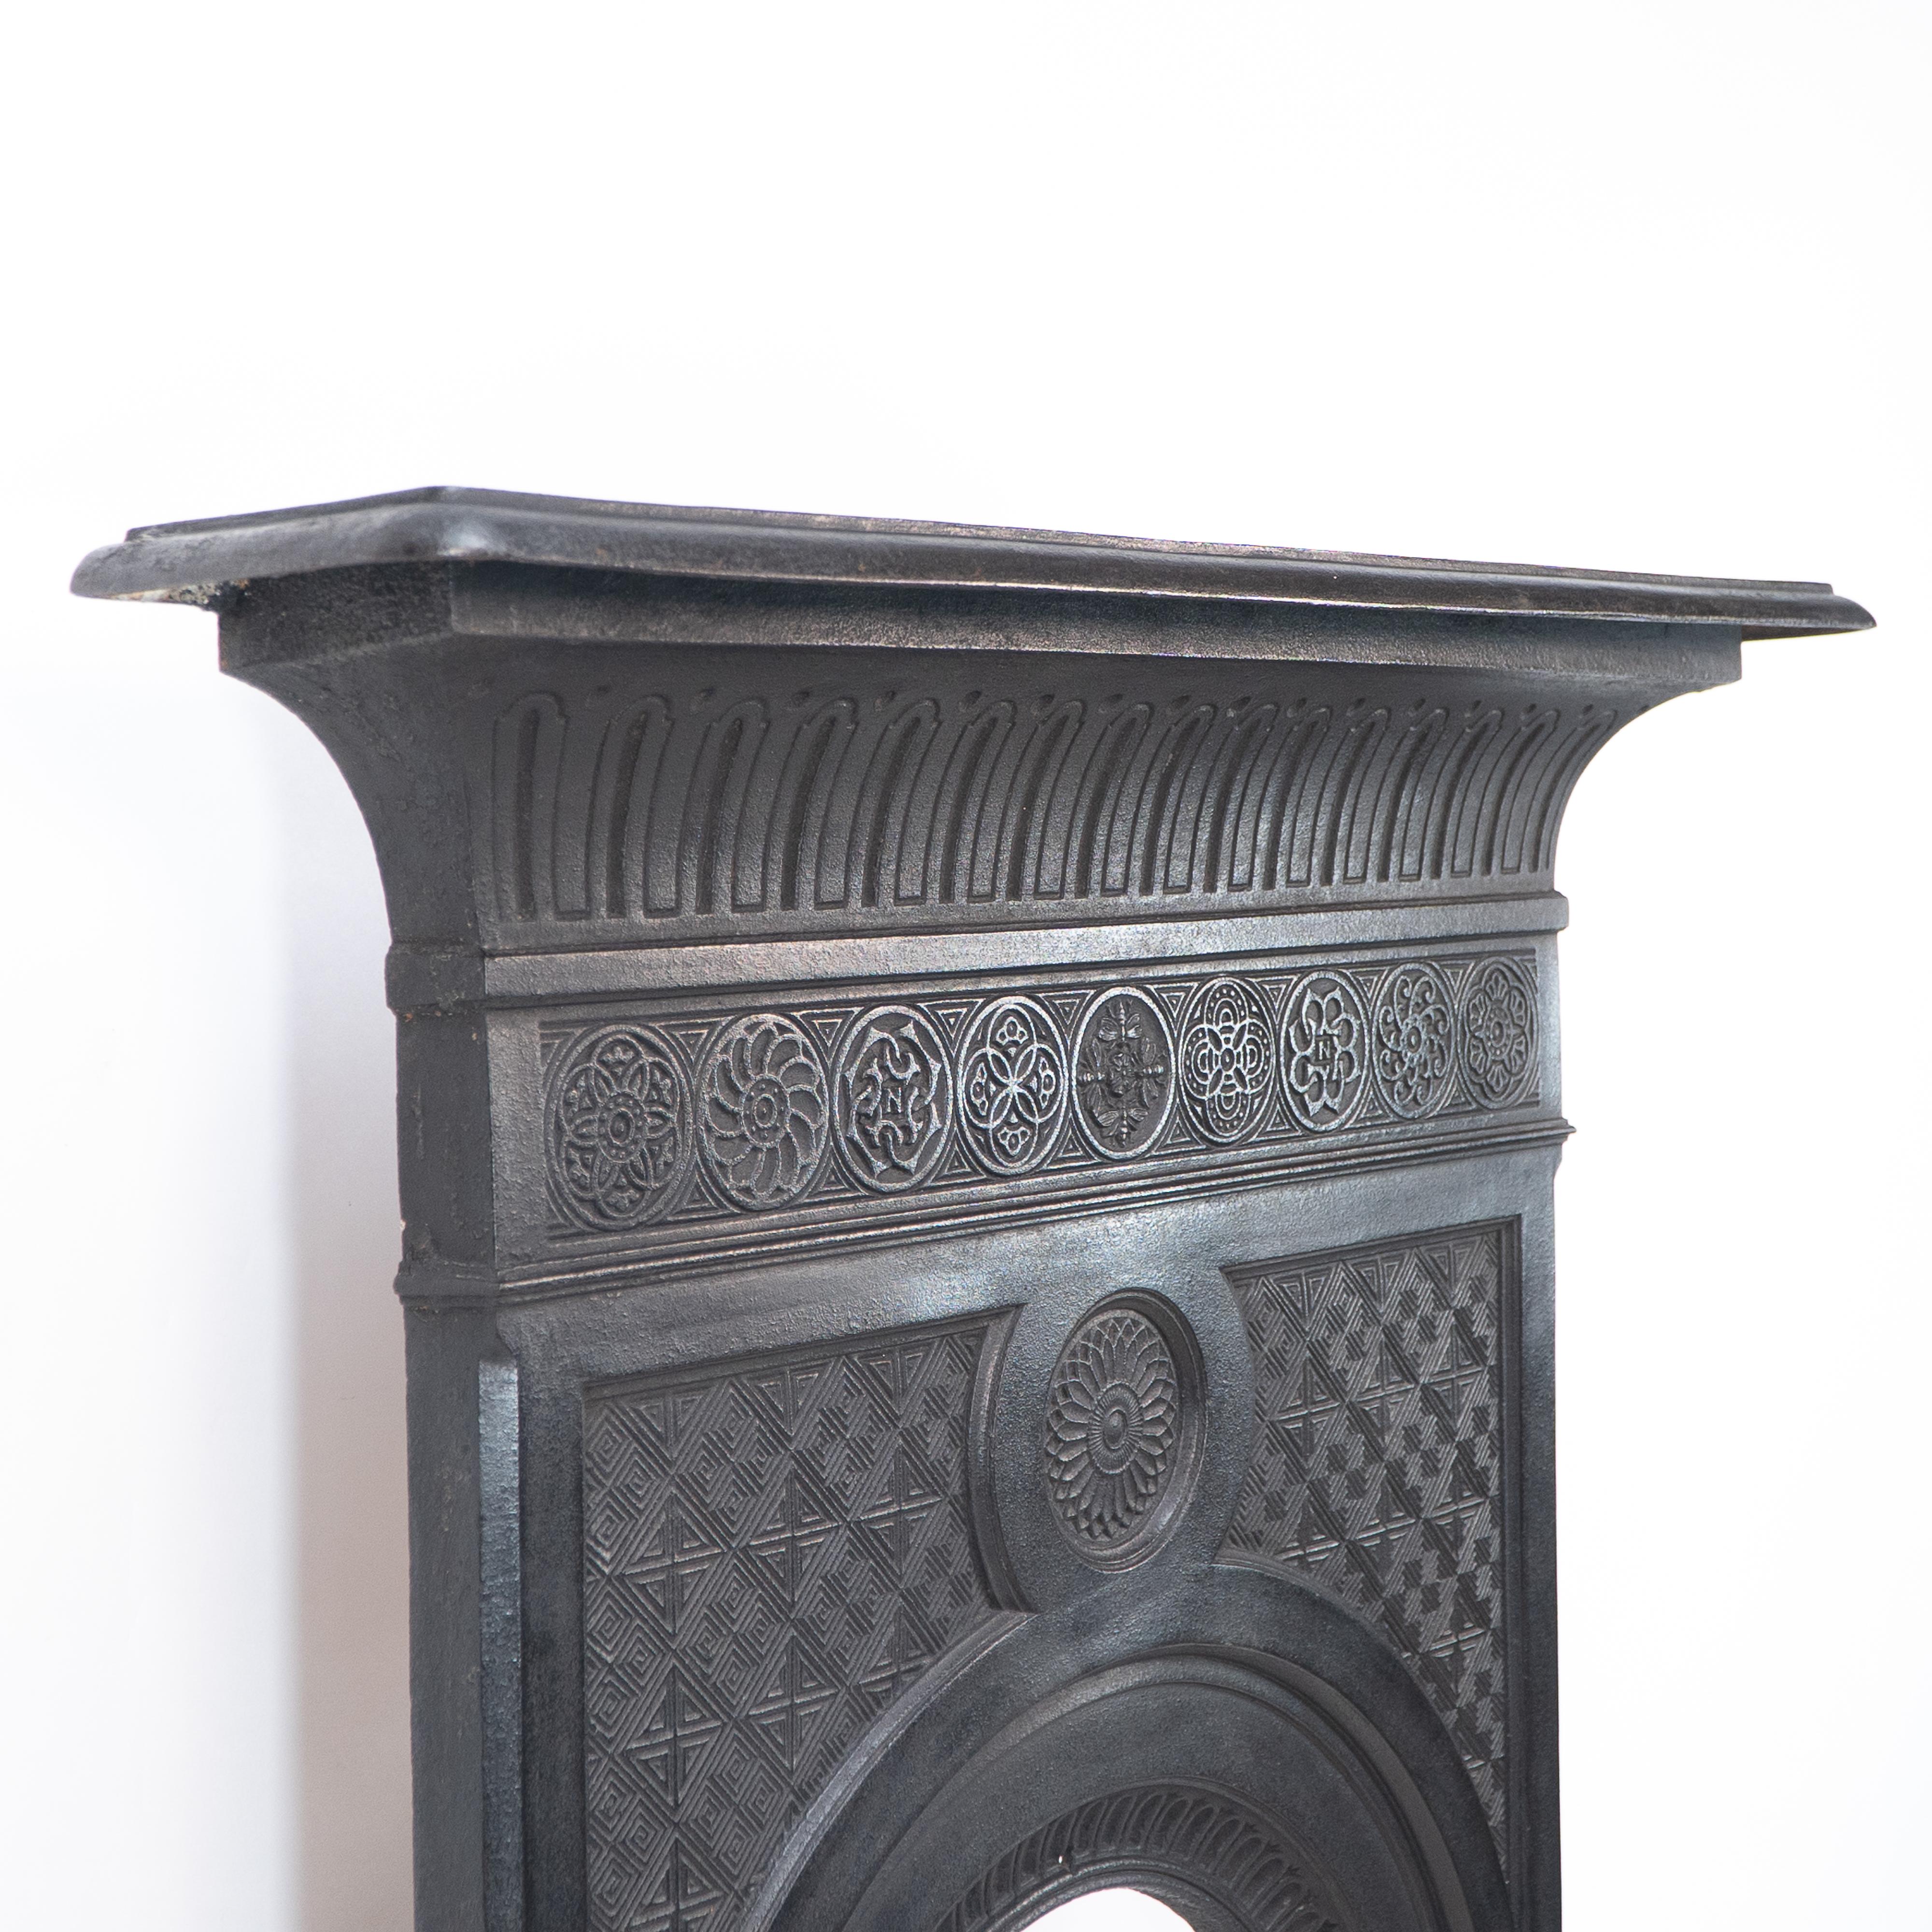 Thomas Jeckyll for Barnard Bishop & Barnard. A rare Aesthetic Movement fireplace For Sale 7